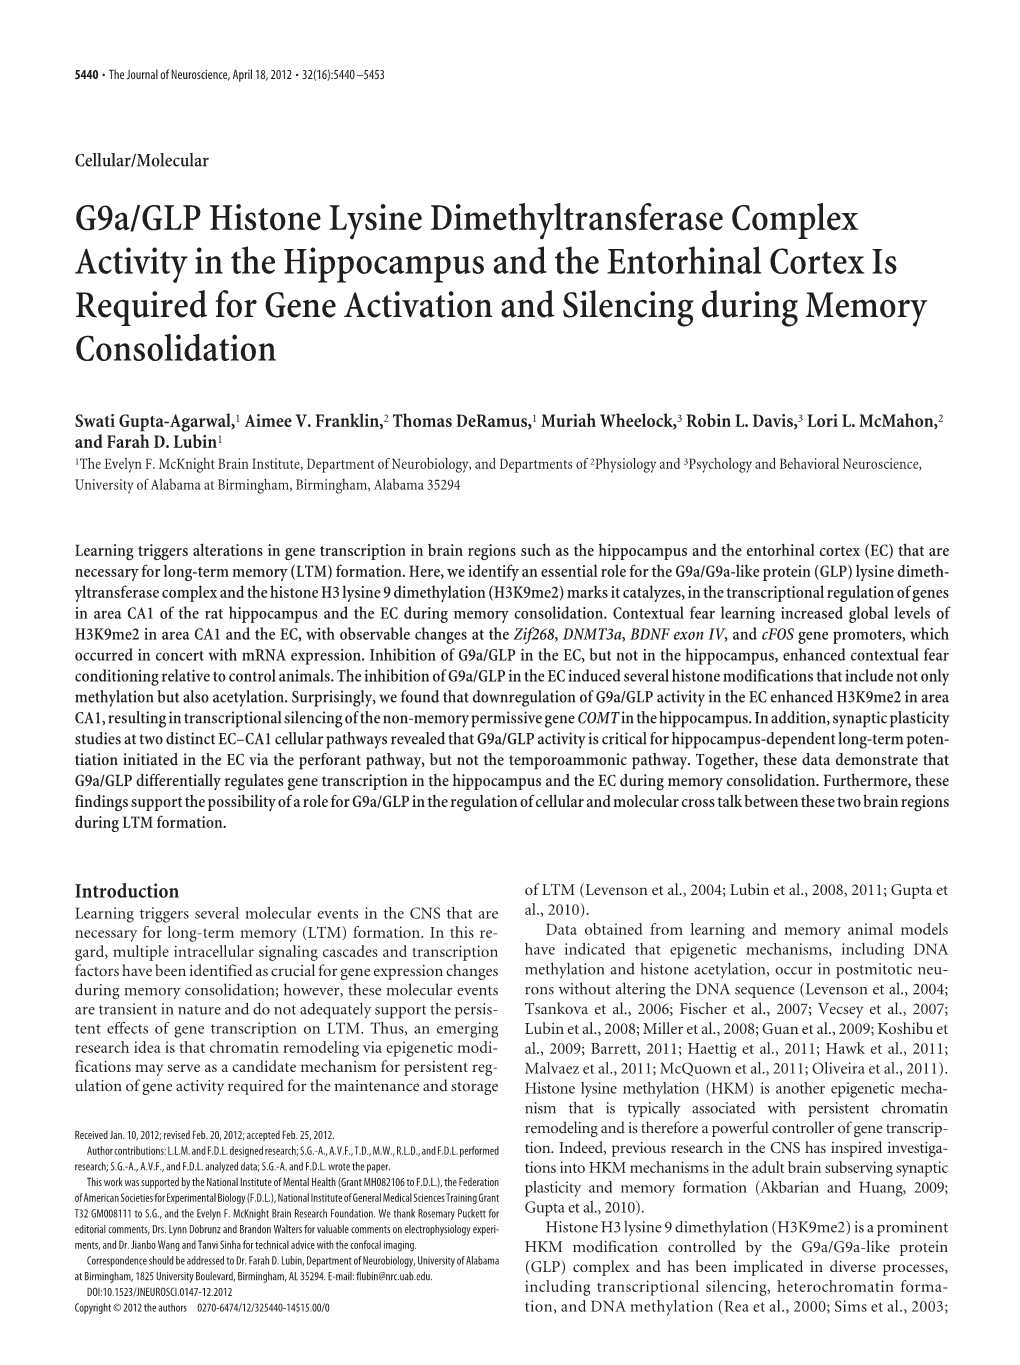 G9a/GLP Histone Lysine Dimethyltransferase Complex